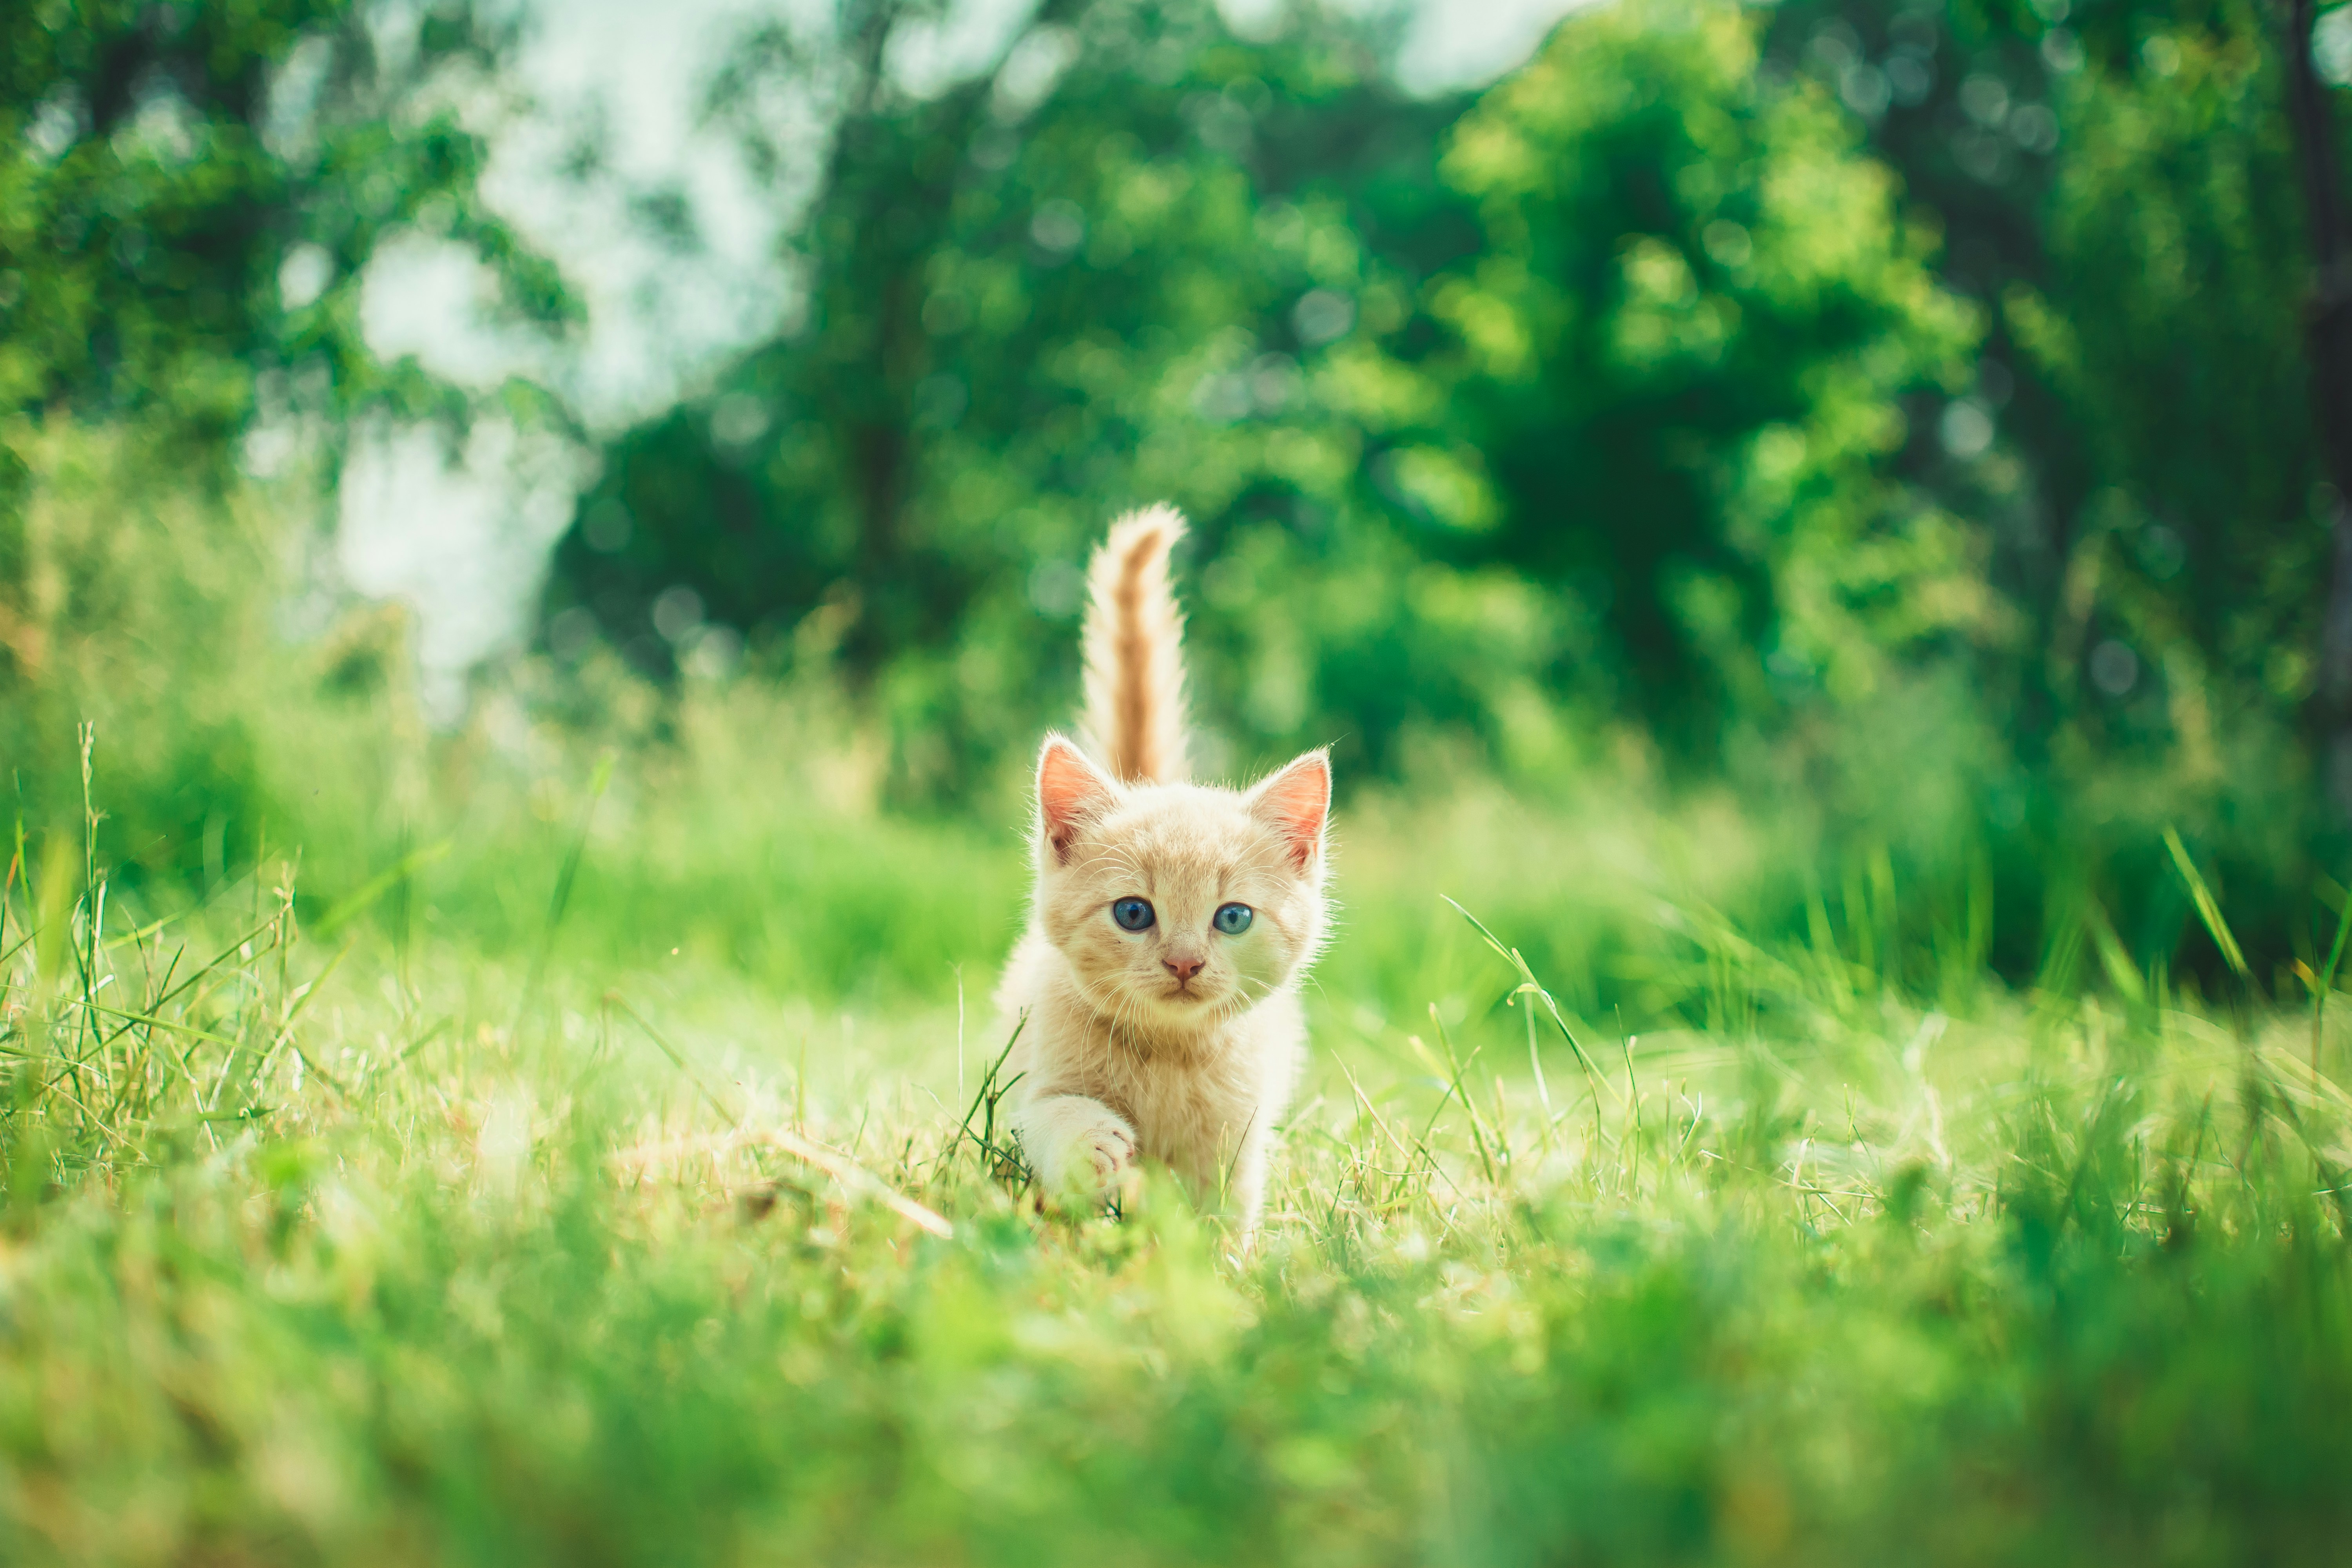 Little Cat Walking On Grass